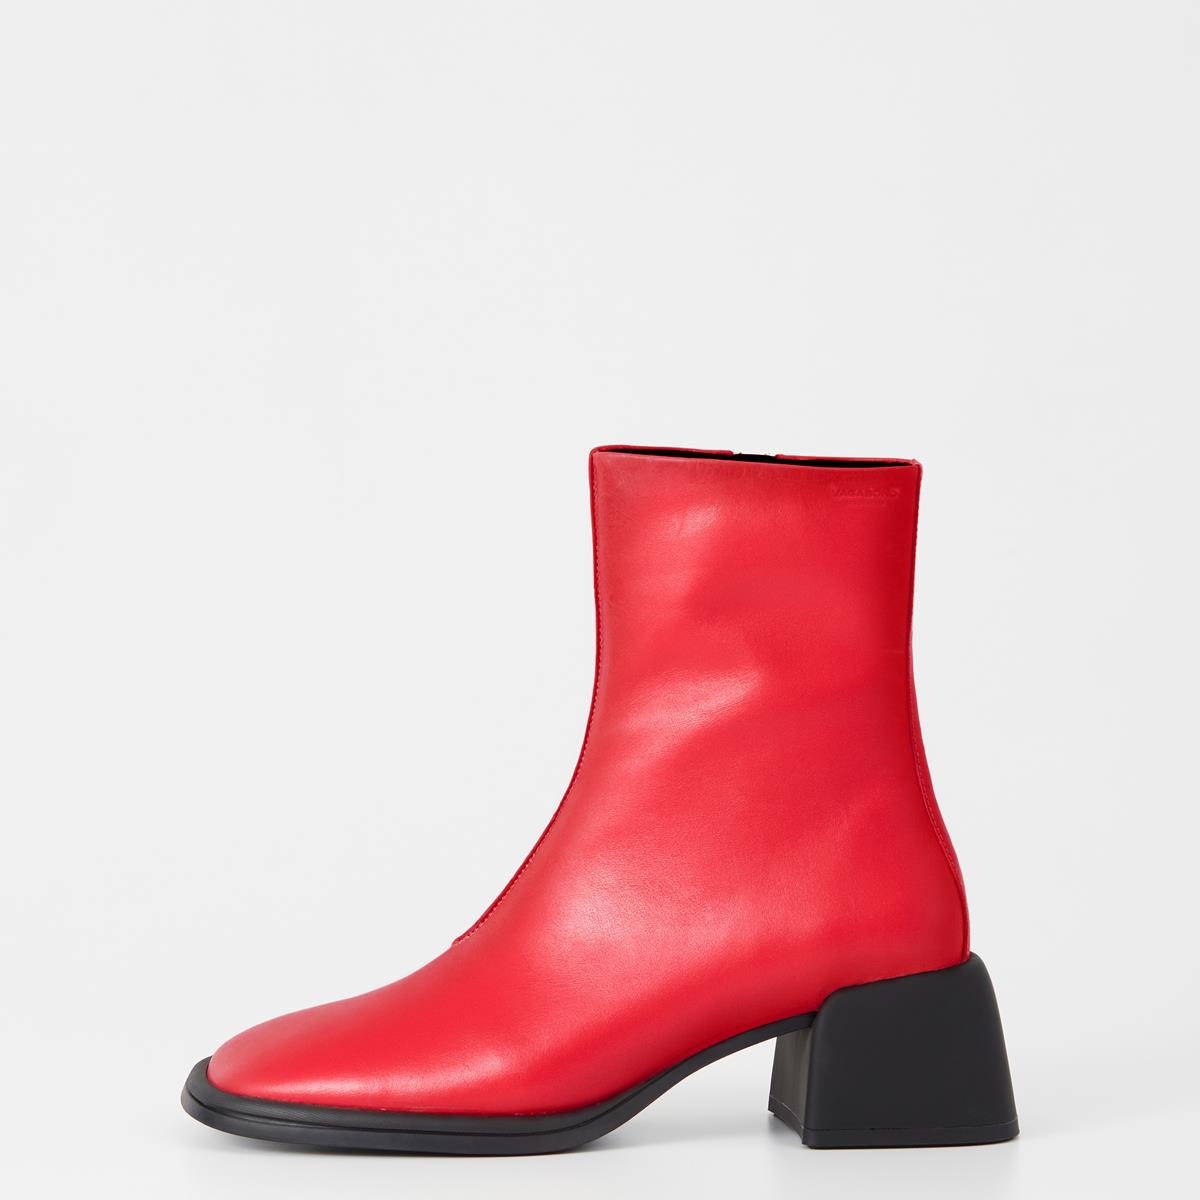 Ansie - Red Boots Woman | Vagabond